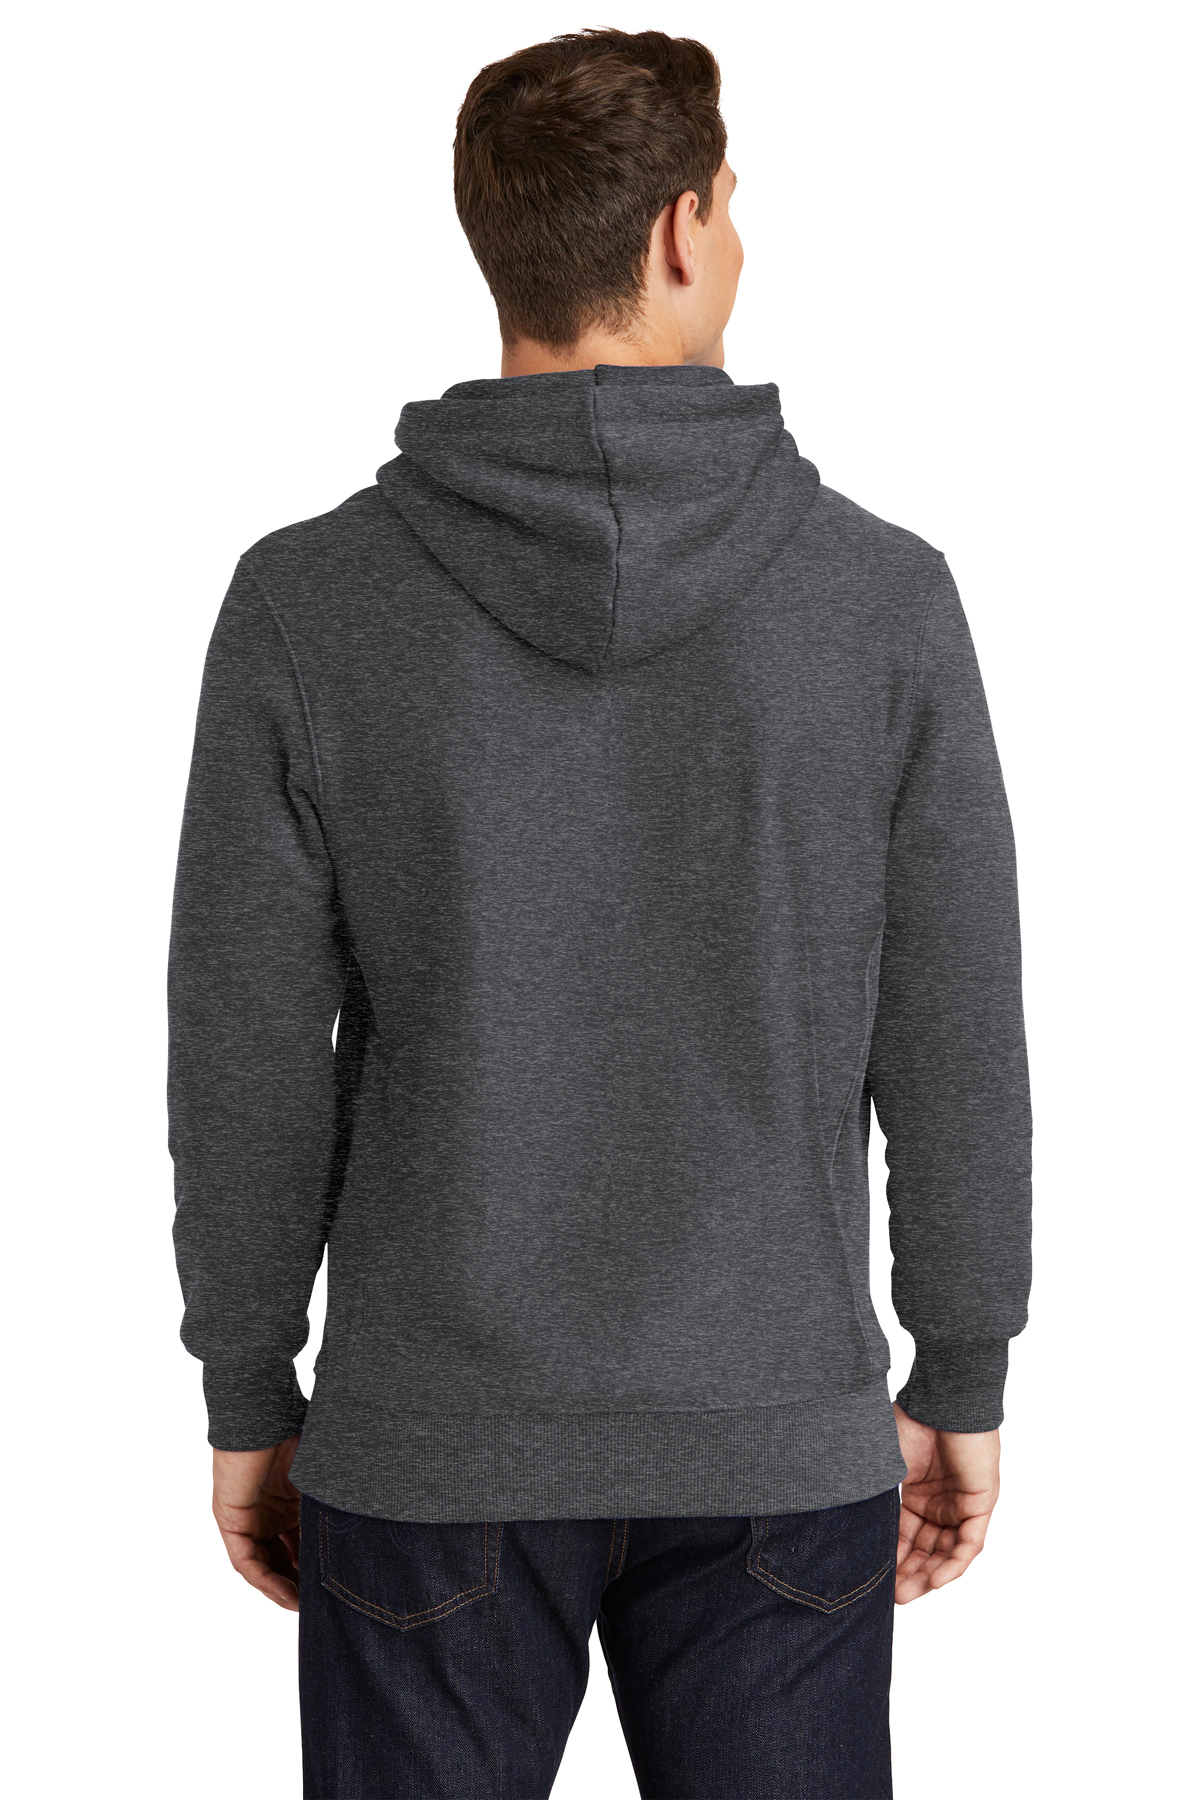 Sport-Tek Super Heavyweight Sweatshirt | Pullover Hooded Product Sport-Tek 